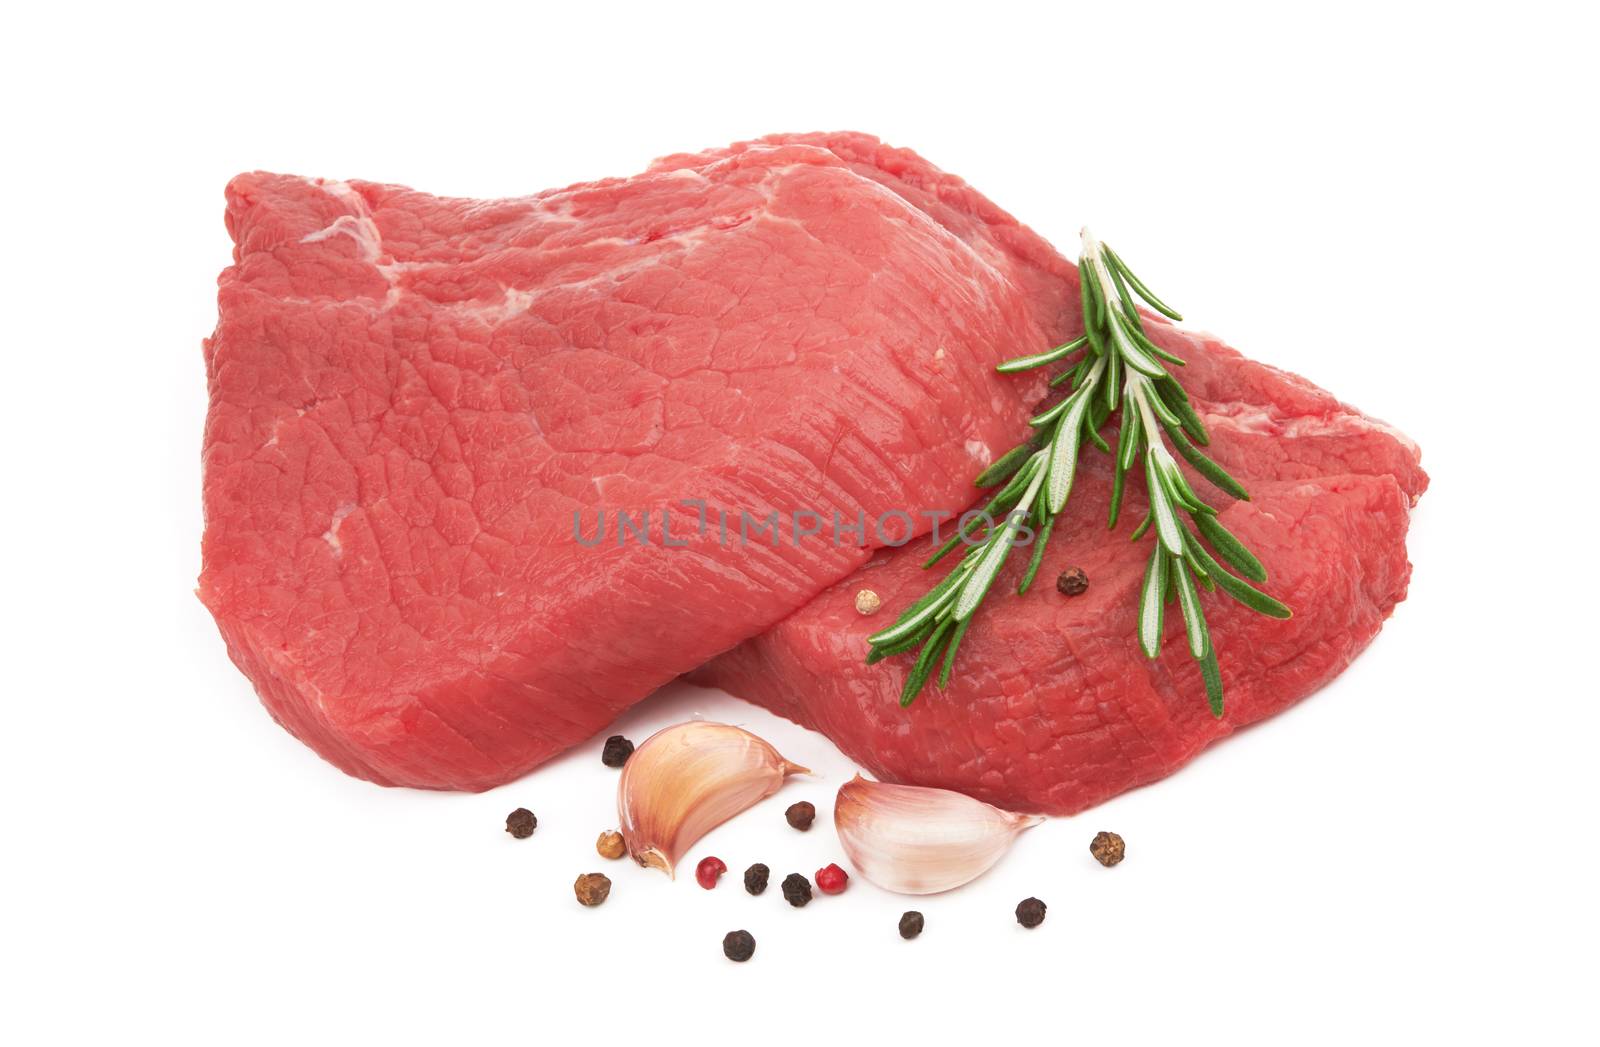 Fresh raw meat isolated on white background